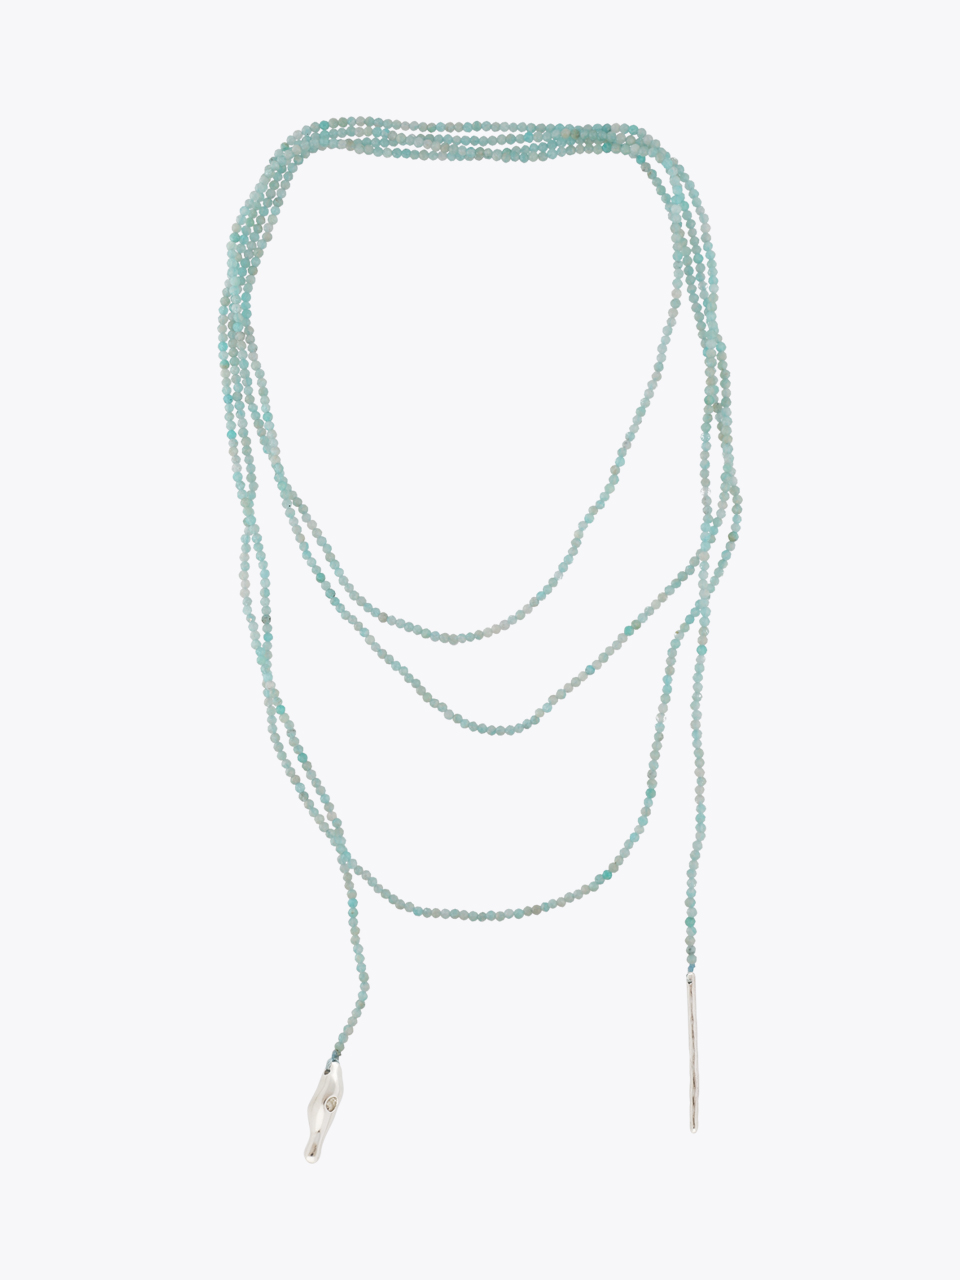 Stone scarf necklace - Mint